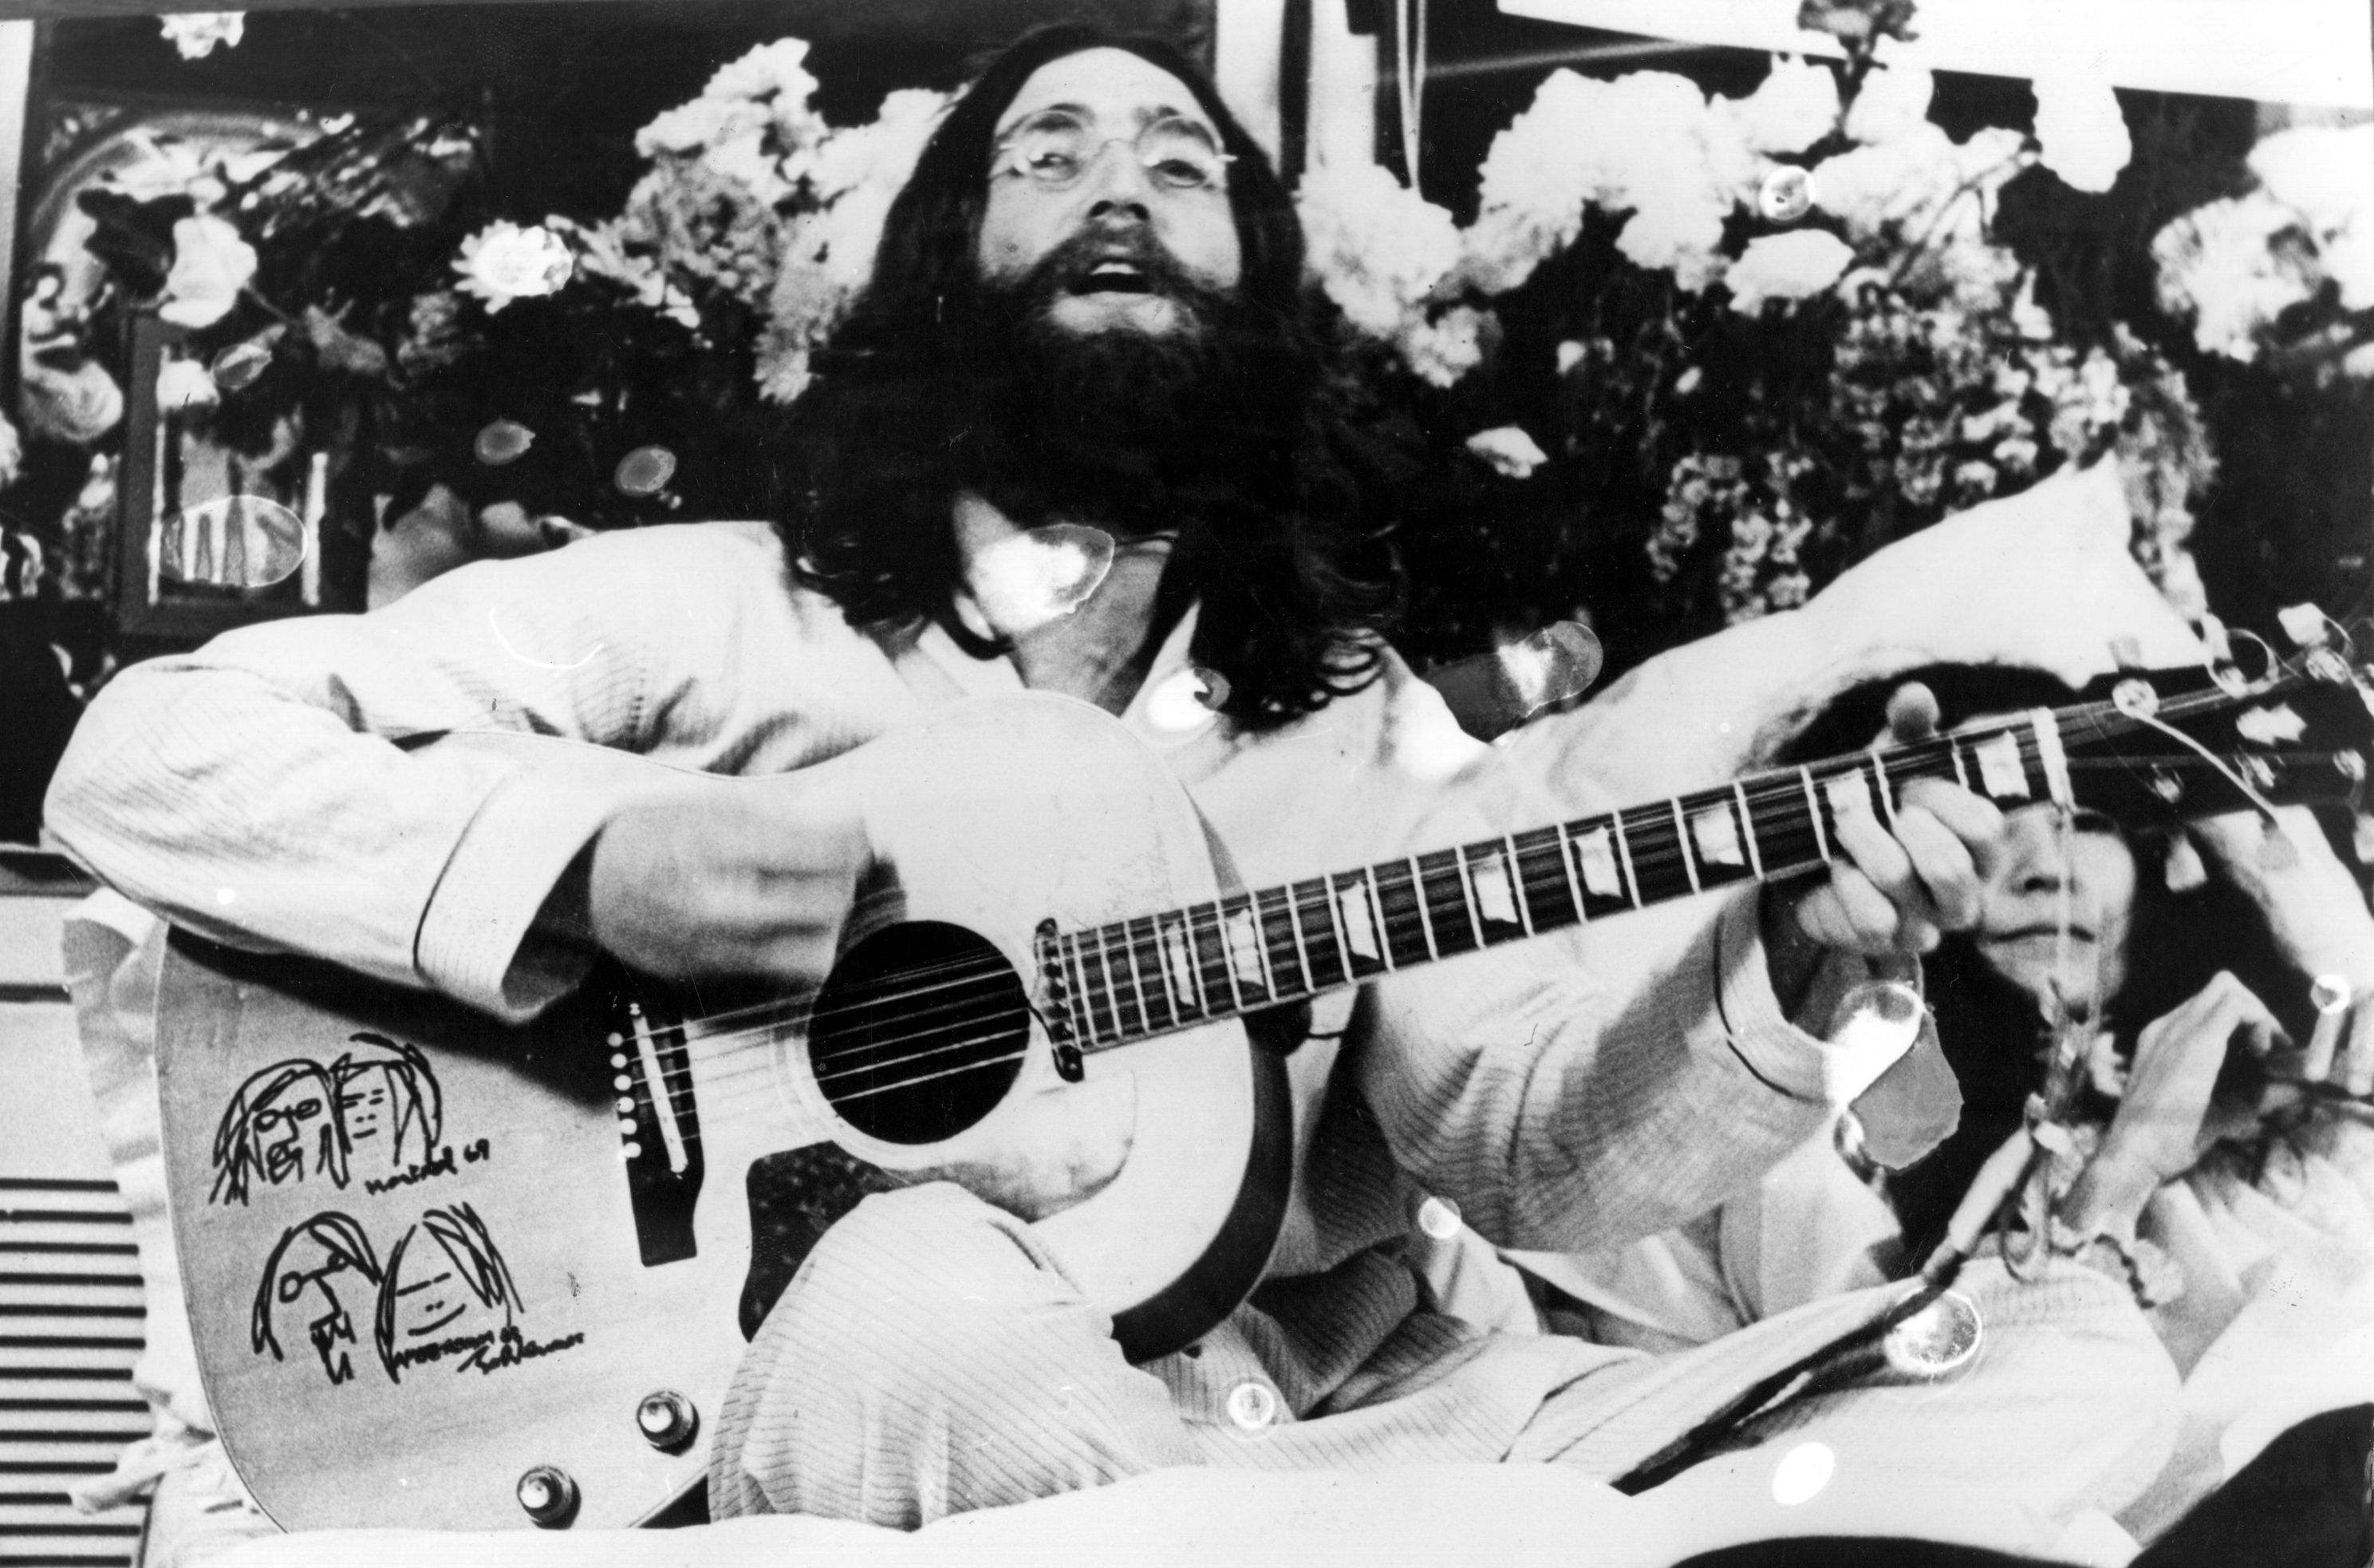 John Lennon with a guitar during The Beatles' 'White Album' era